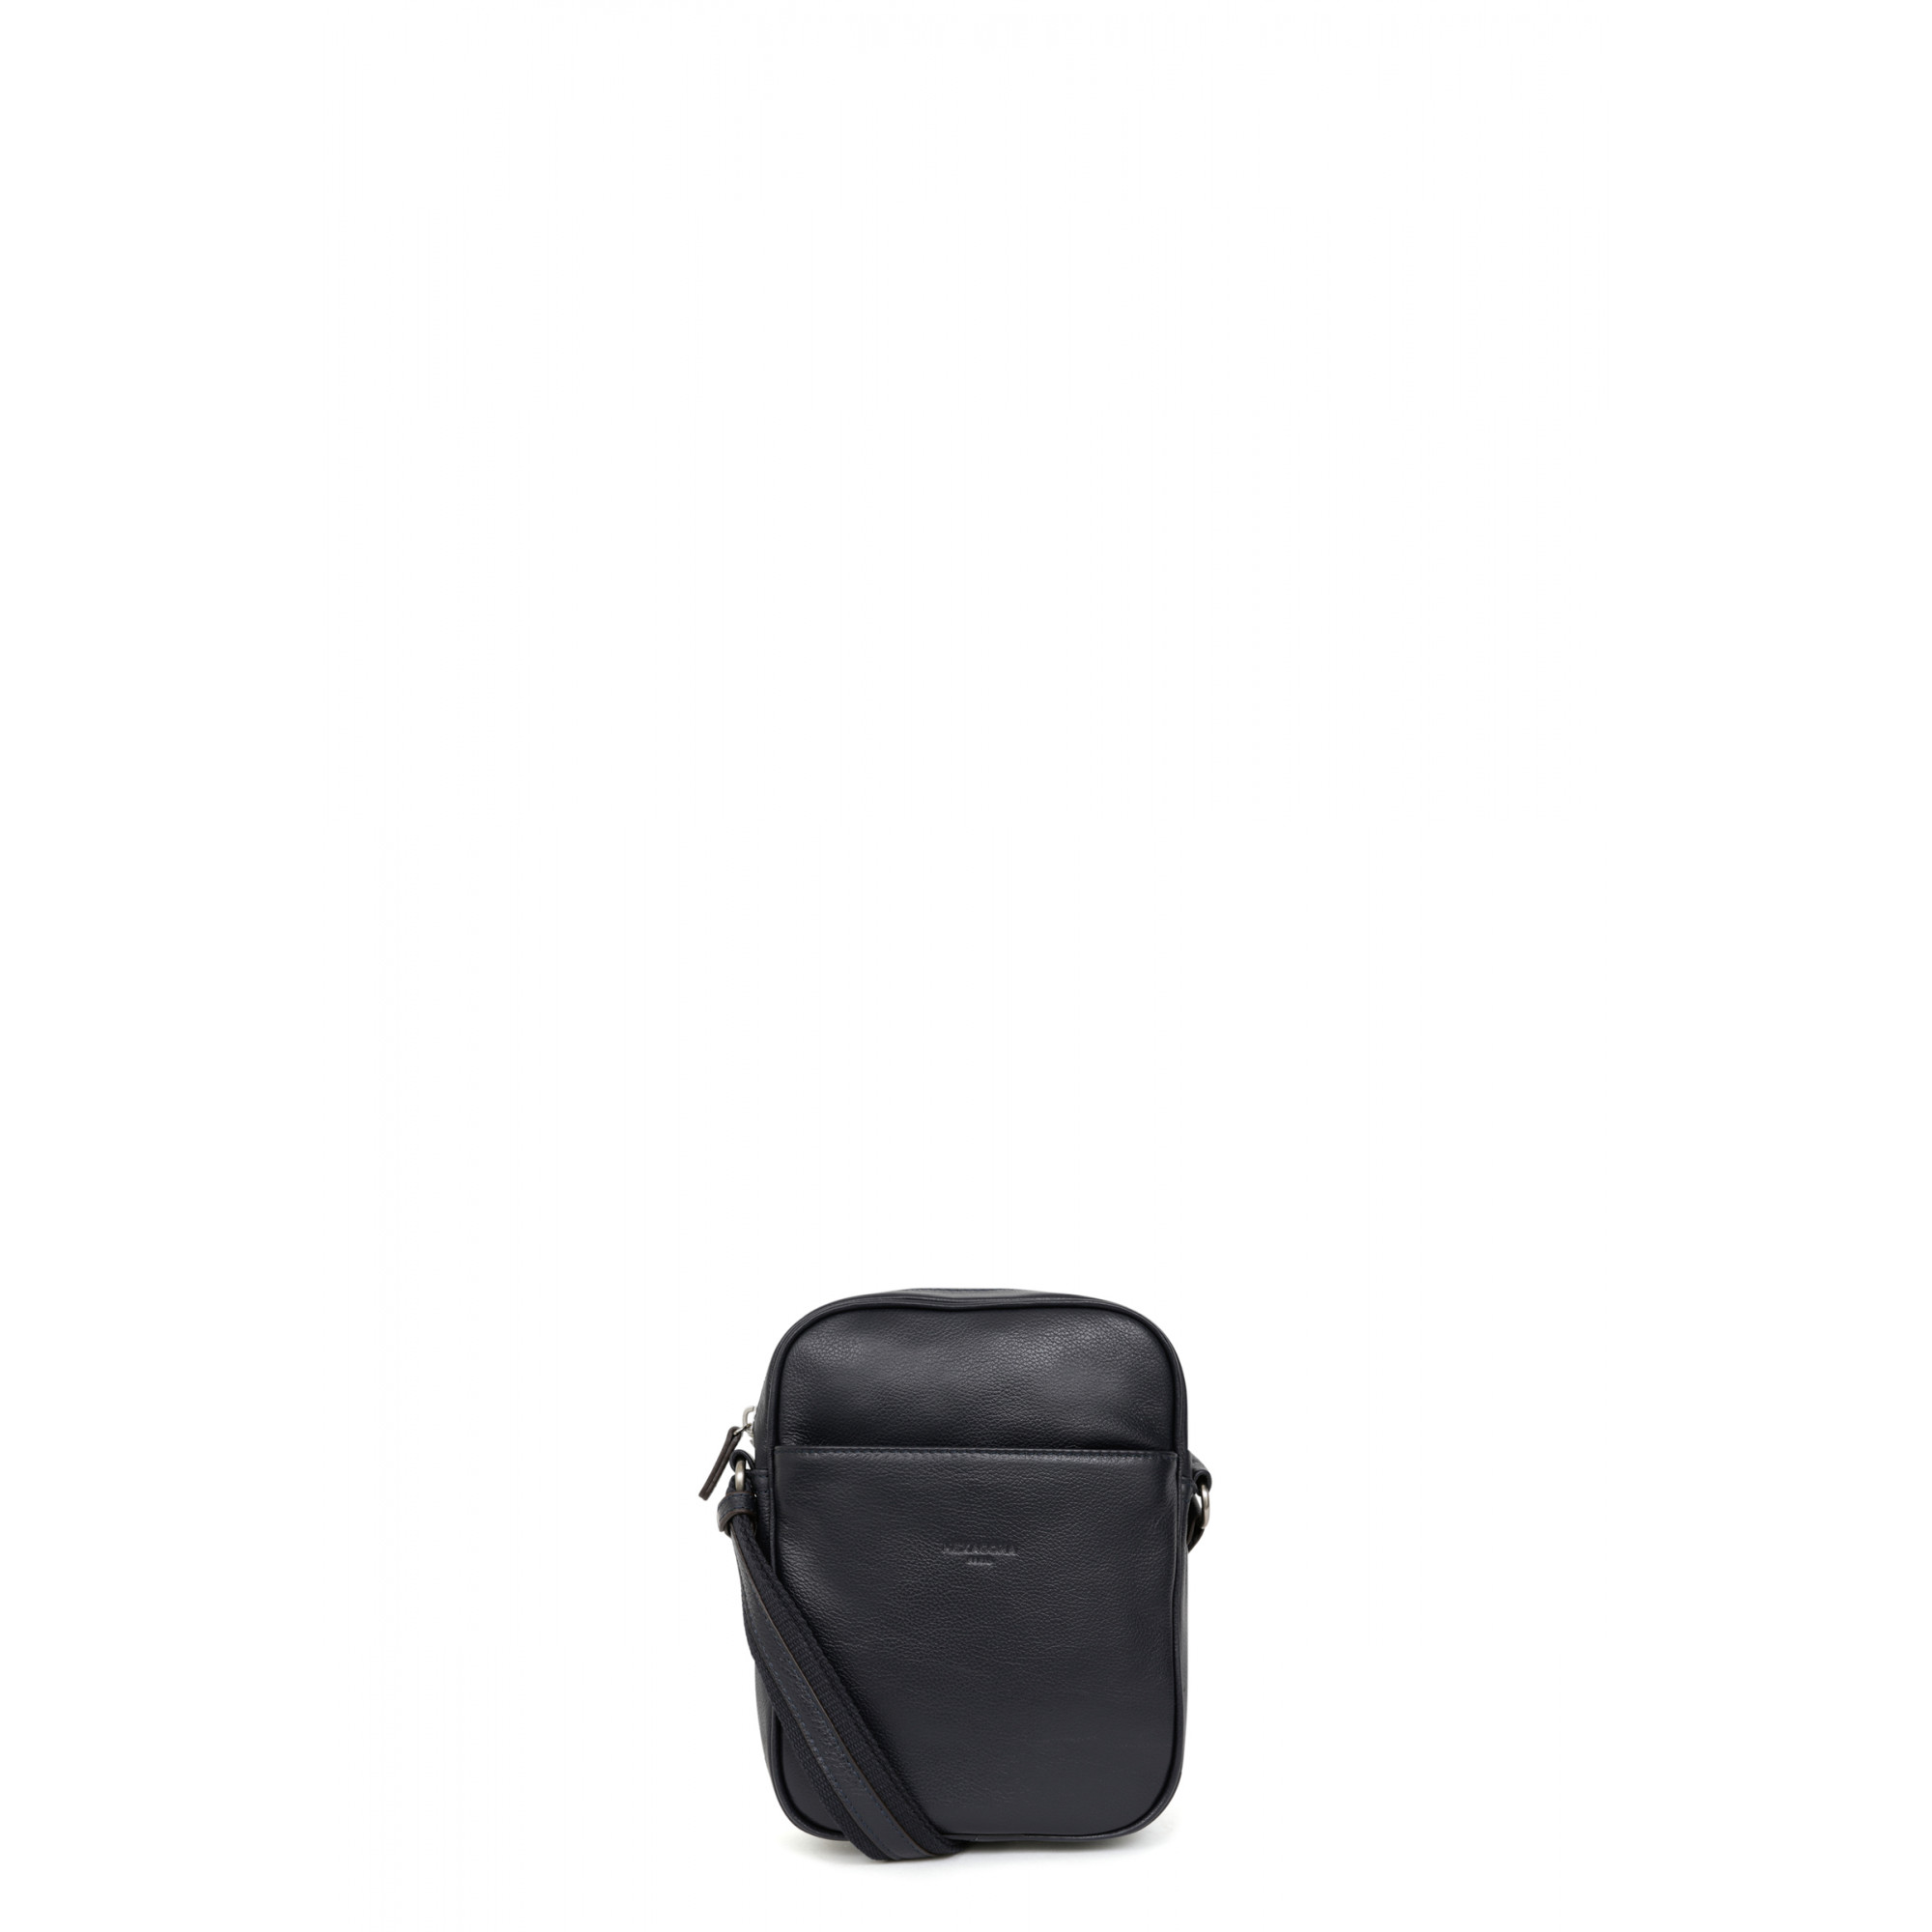 leather-small-messenger-bag-462697